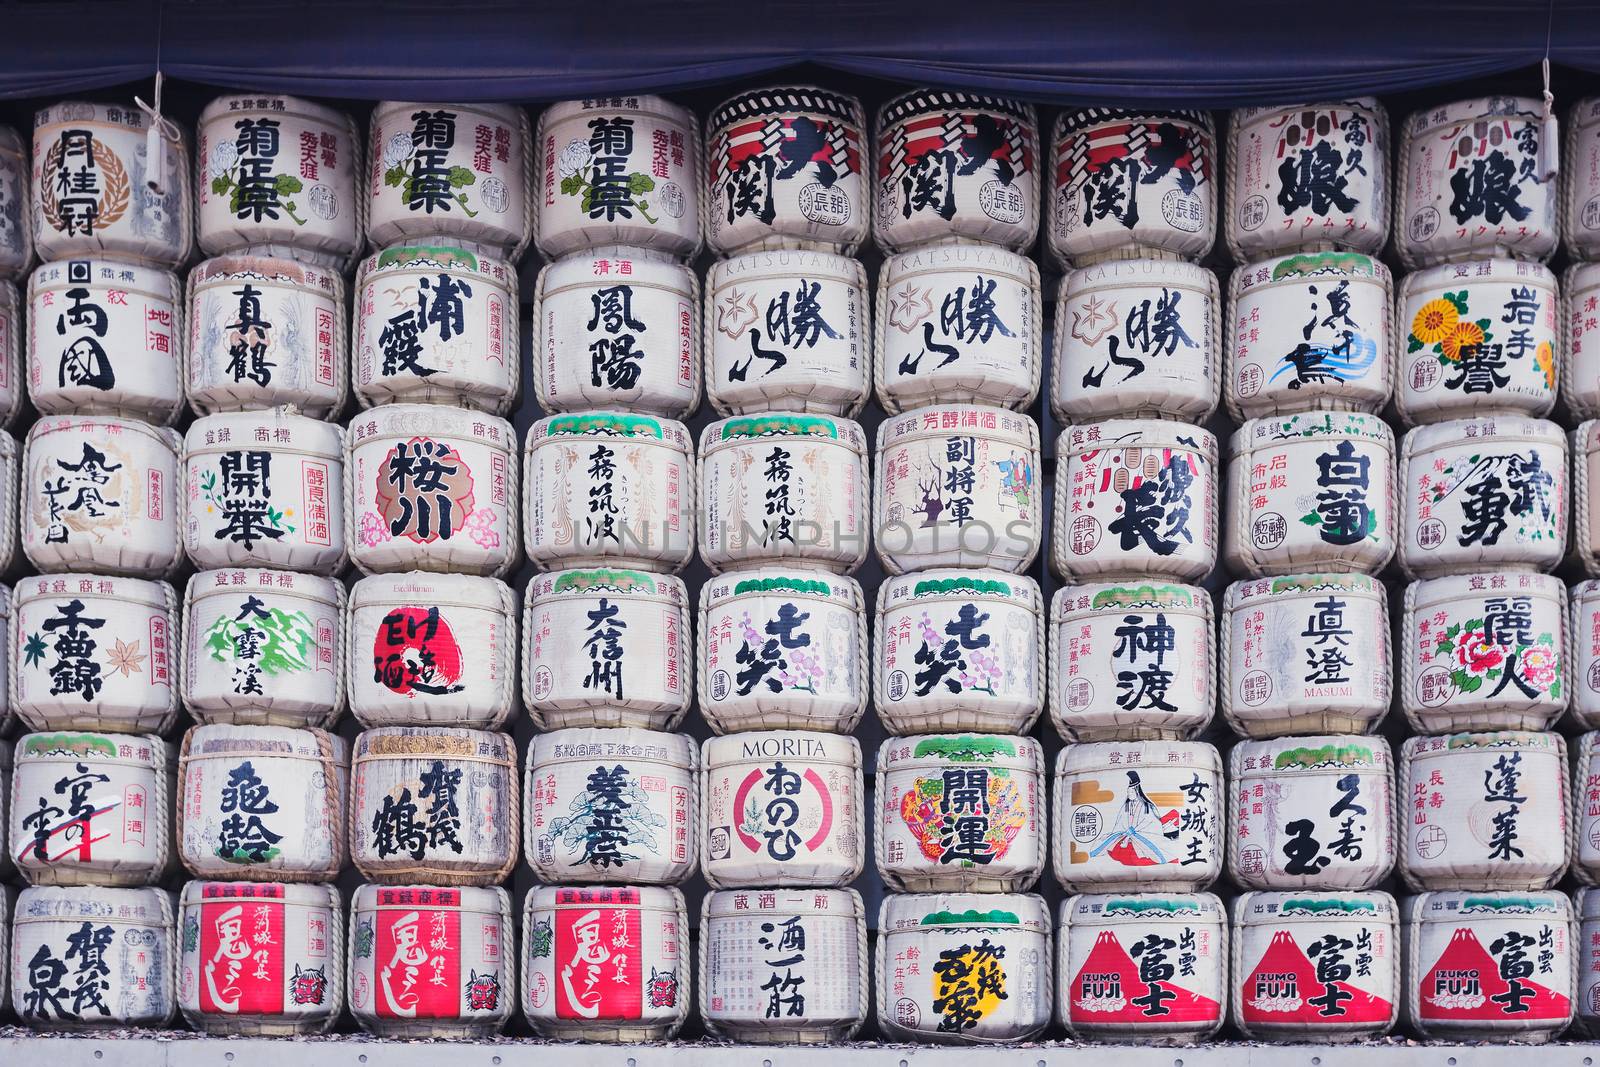 Barrels of sake donated by sake brewers from around Japan to the Meiji Jingu Shrine in Tokyo, Japan